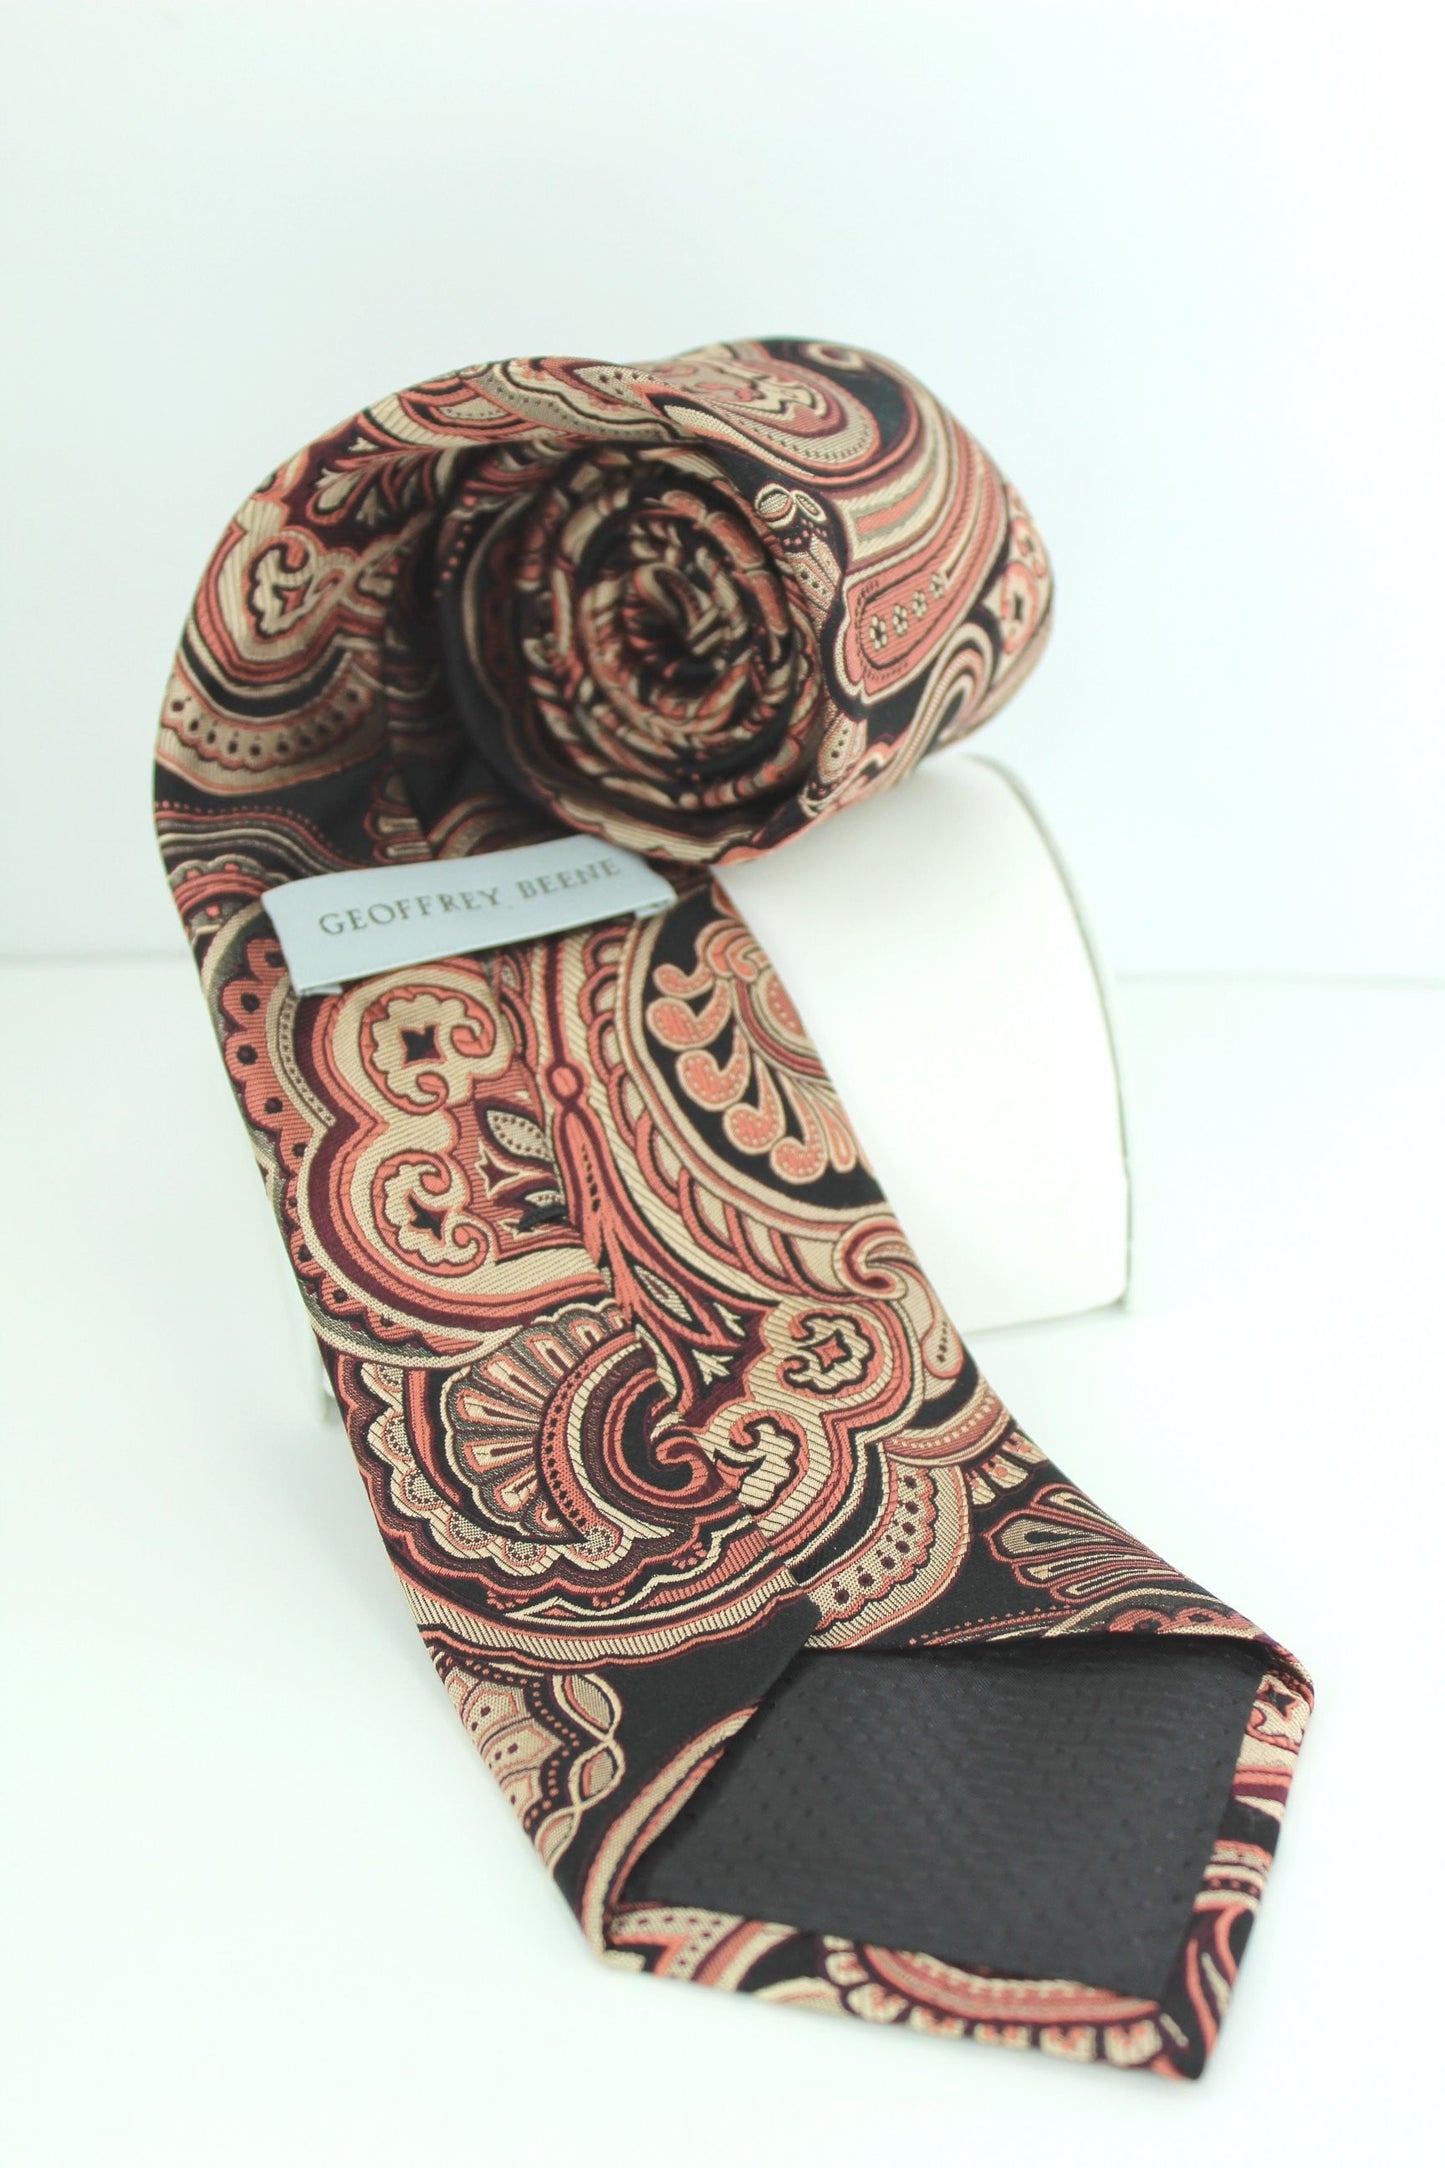 Geoffrey Beene NY Silk Tie - Black Paisley Rose Nude Lovely Design unusual colors